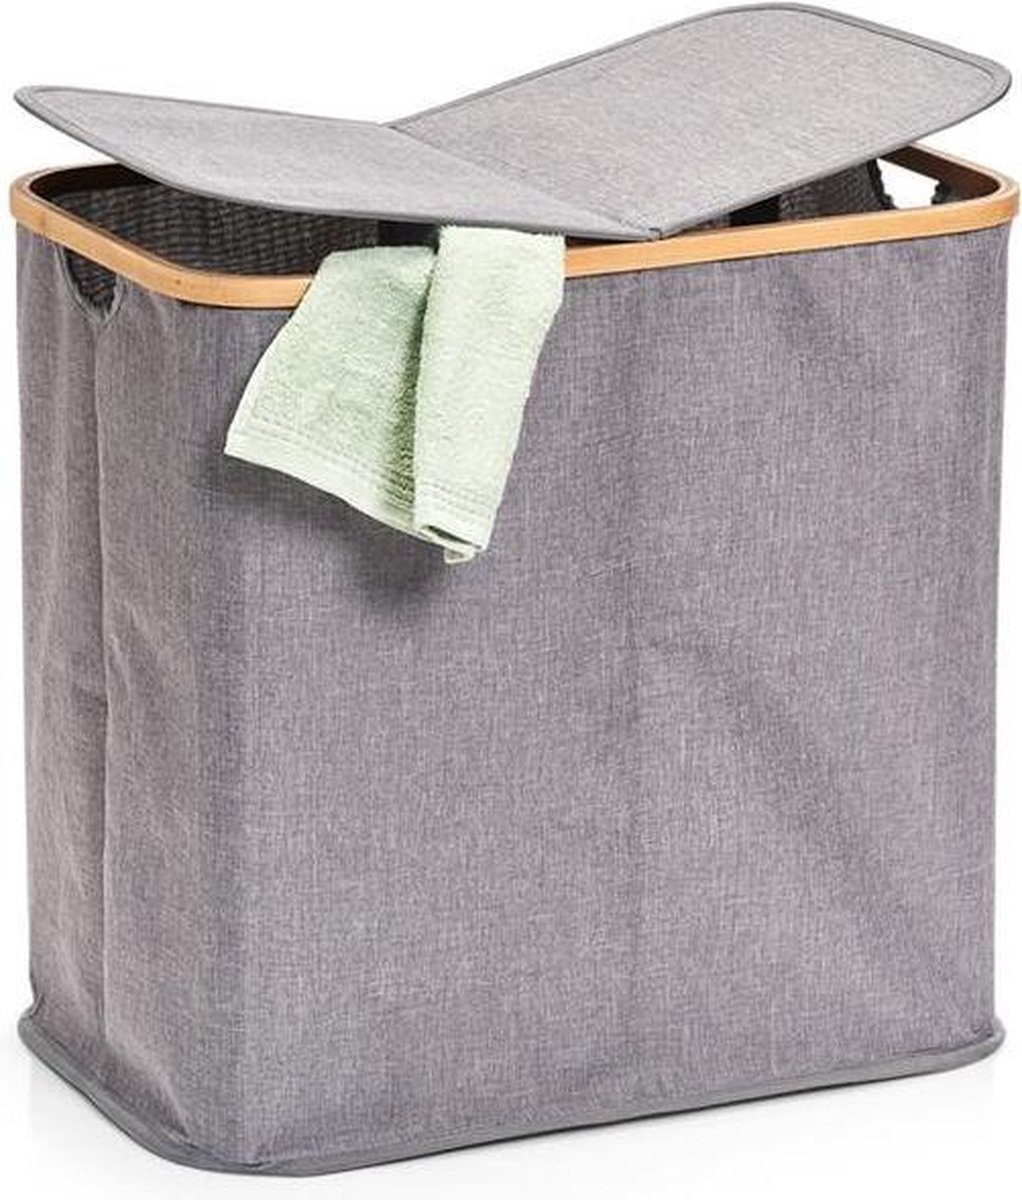 Zeller - Laundry Hamper, double, canvas/bamboo, grey